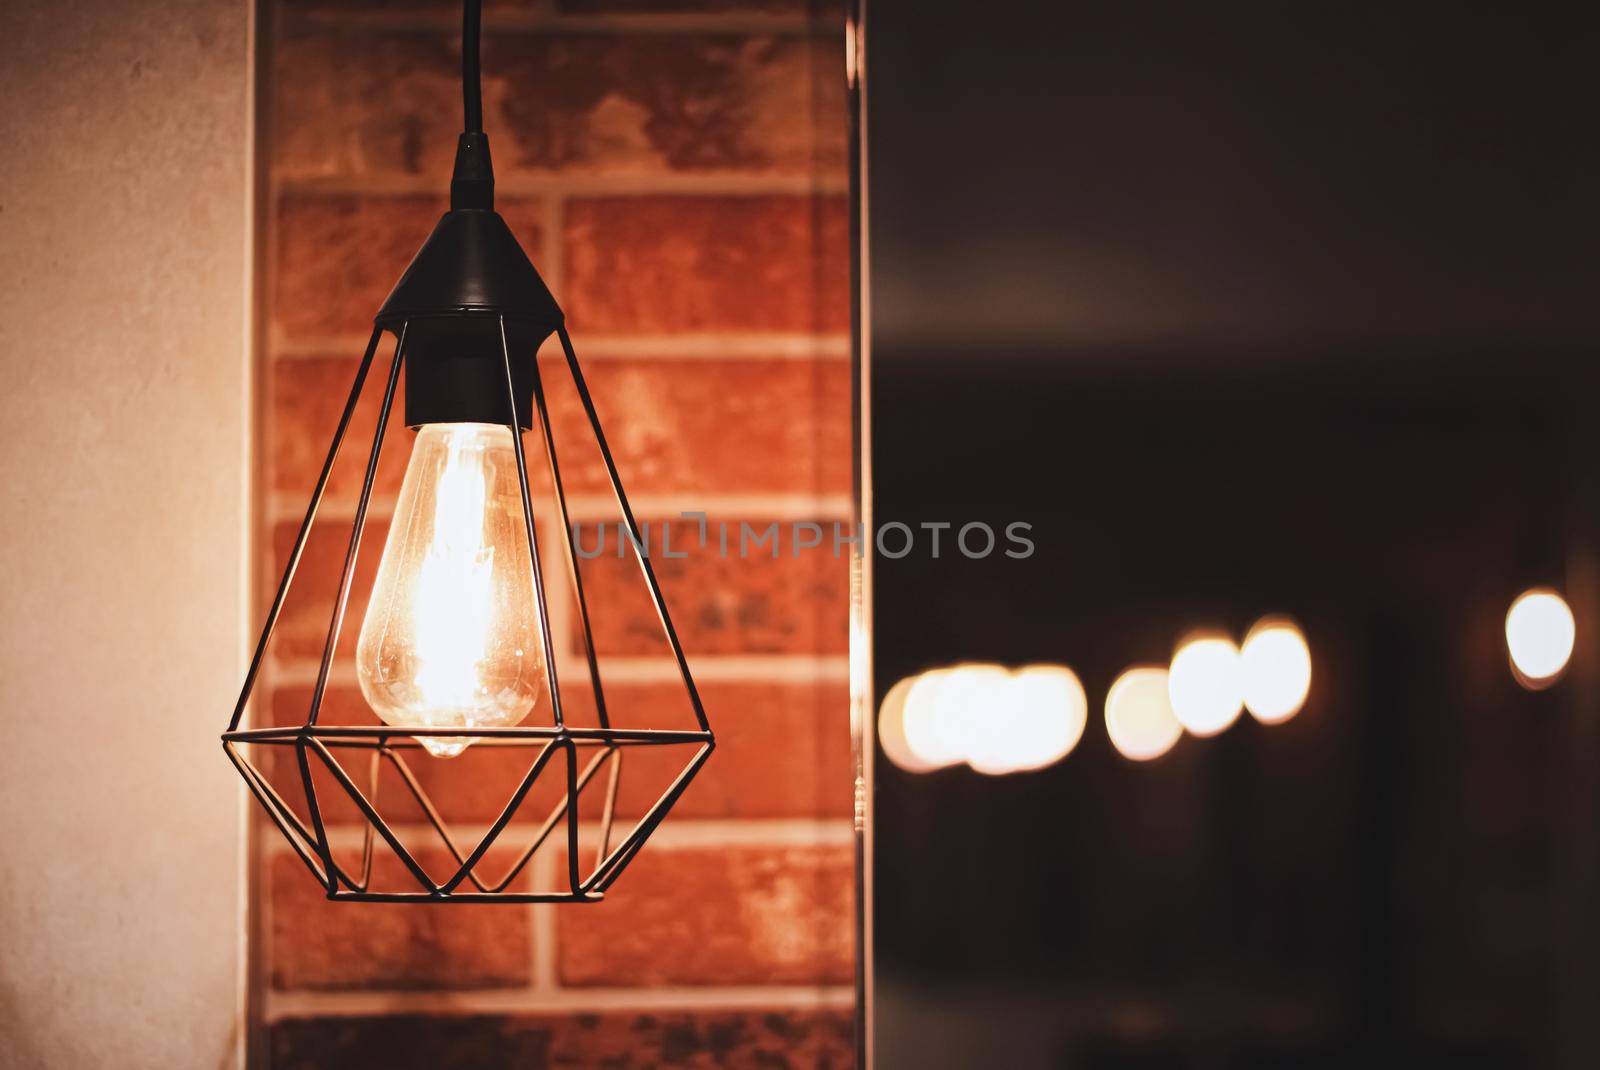 Pendant industrial lamps in loft interior with dark brick walls, modern design and home decor concept